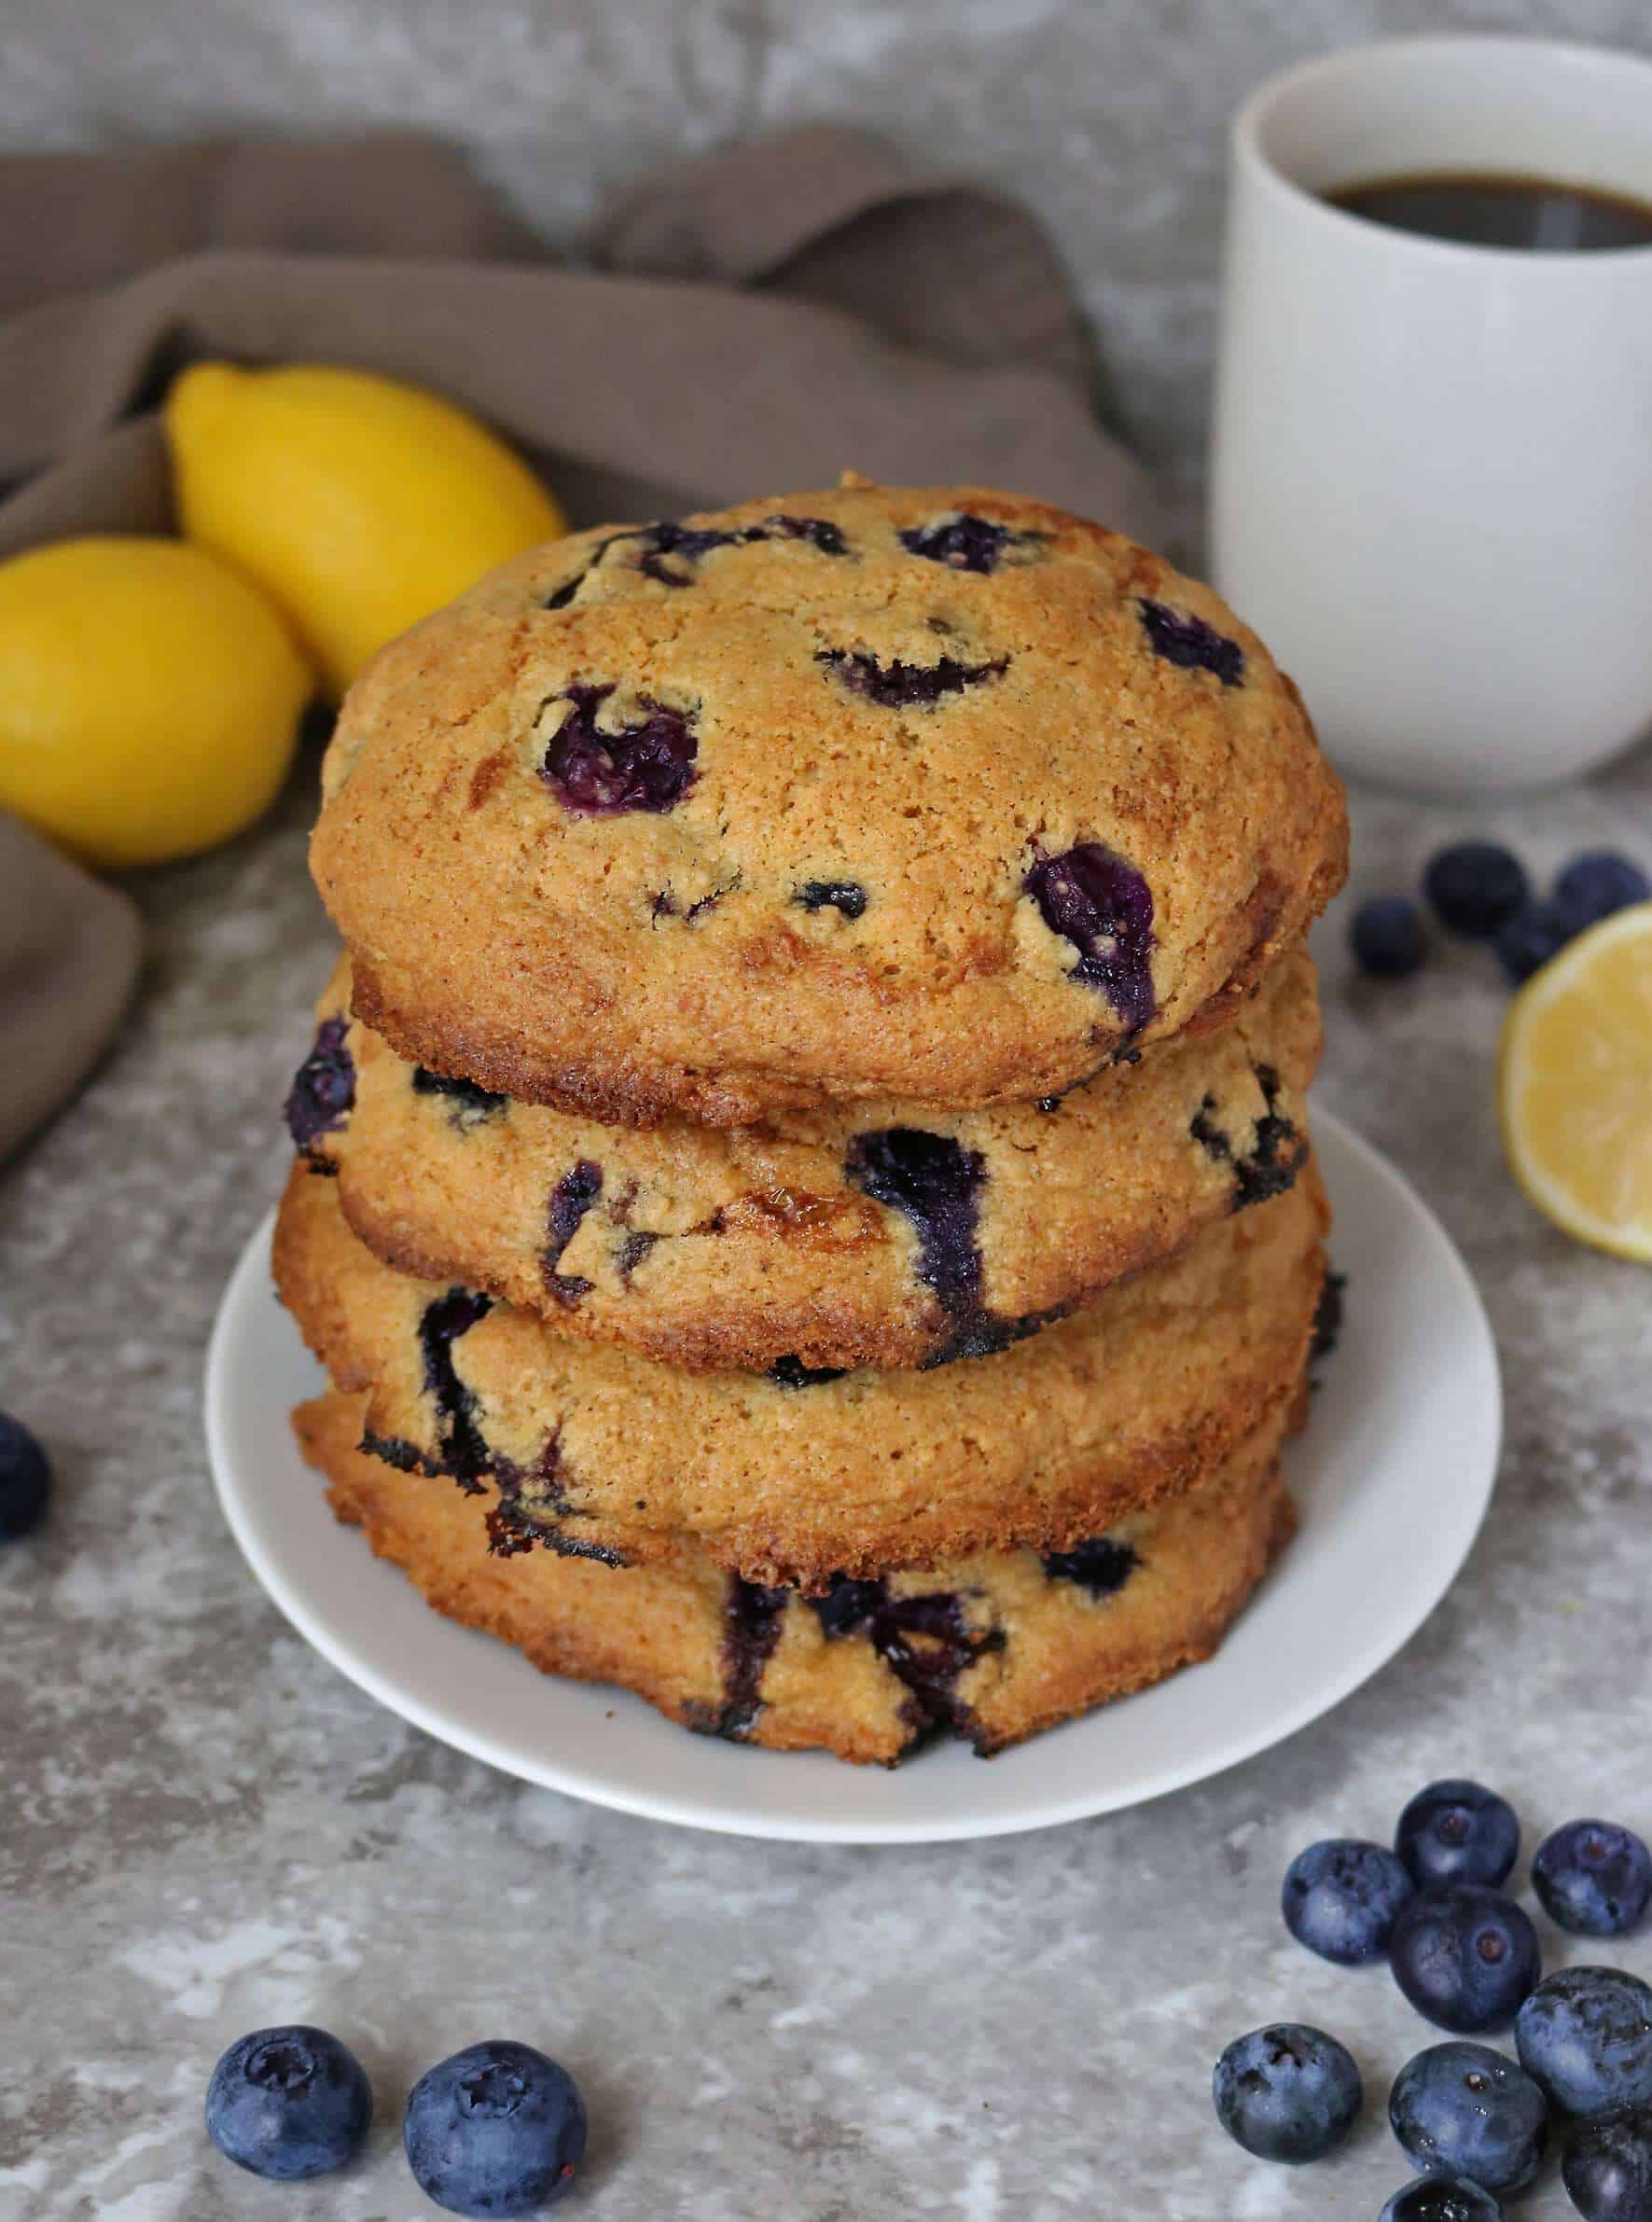 https://savoryspin.com/wp-content/uploads/2019/08/Easy-Gluten-Free-Lemon-Blueberry-Muffin-Tops.jpg